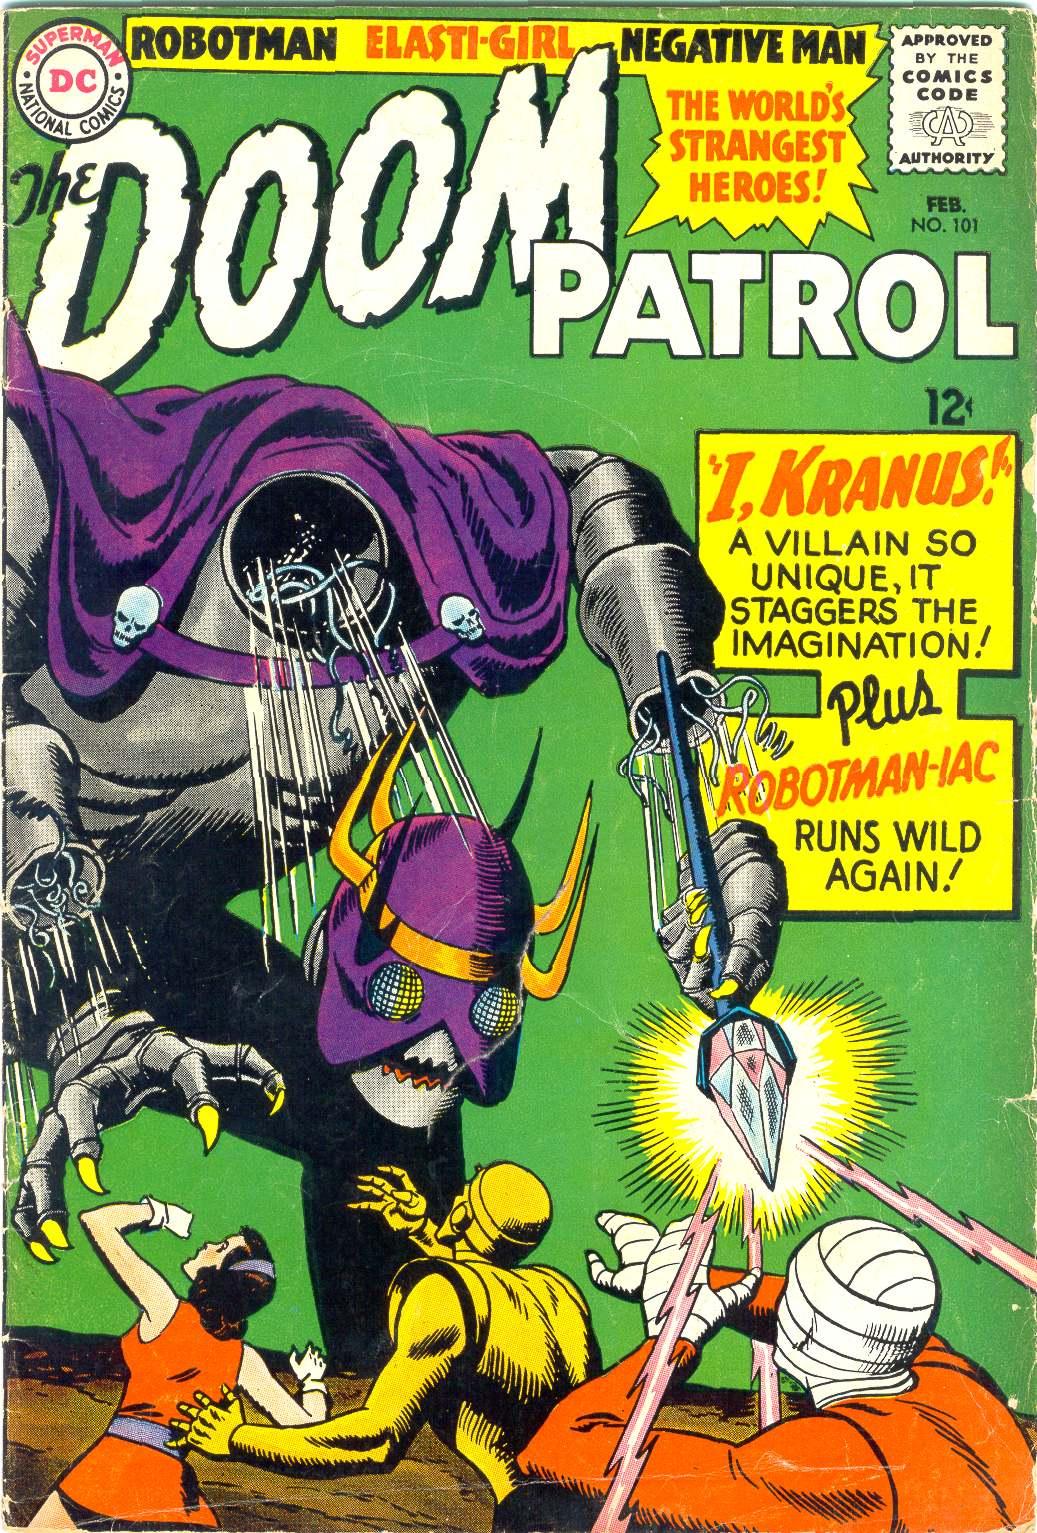 Doom Patrol Vol. 1 #101